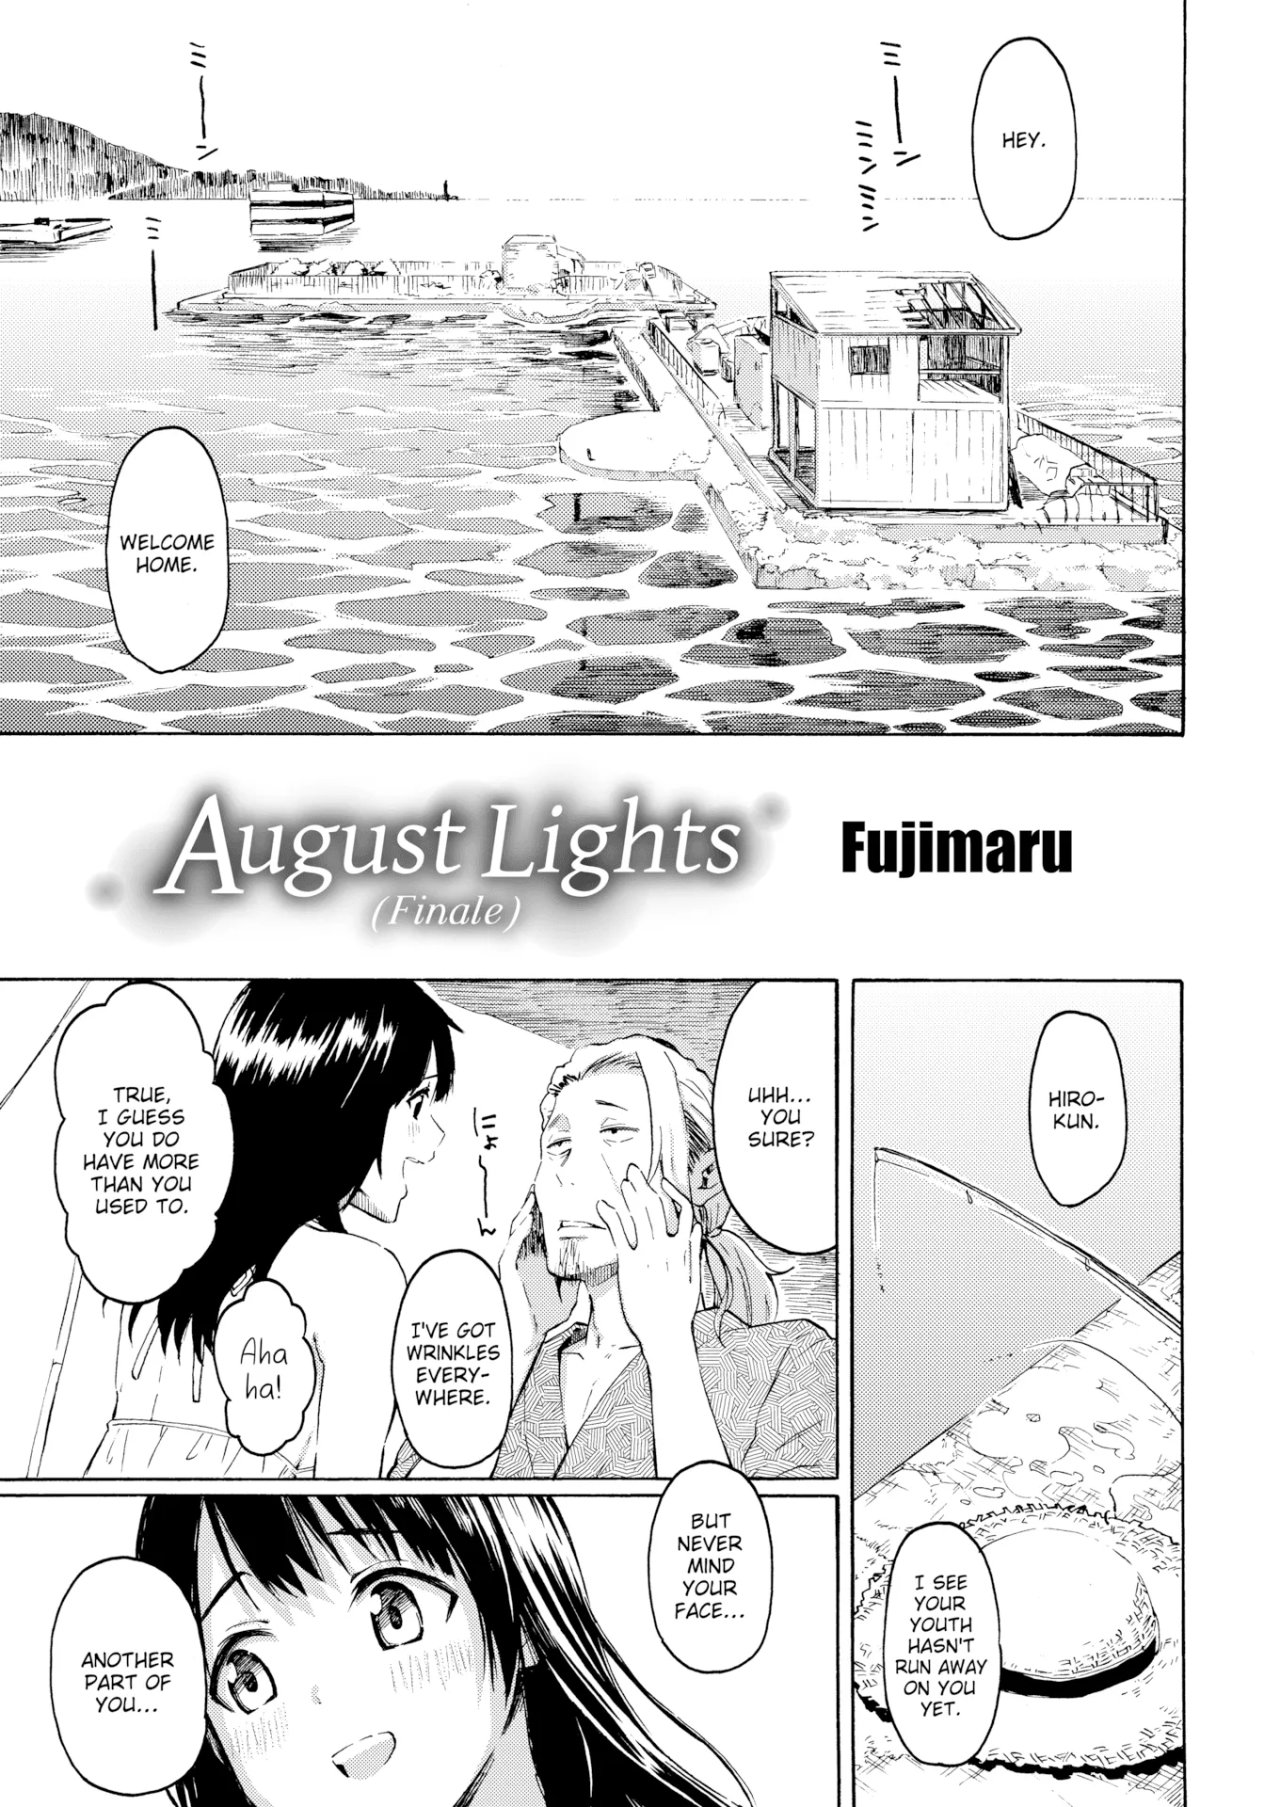 August Lights (Finale) - 3